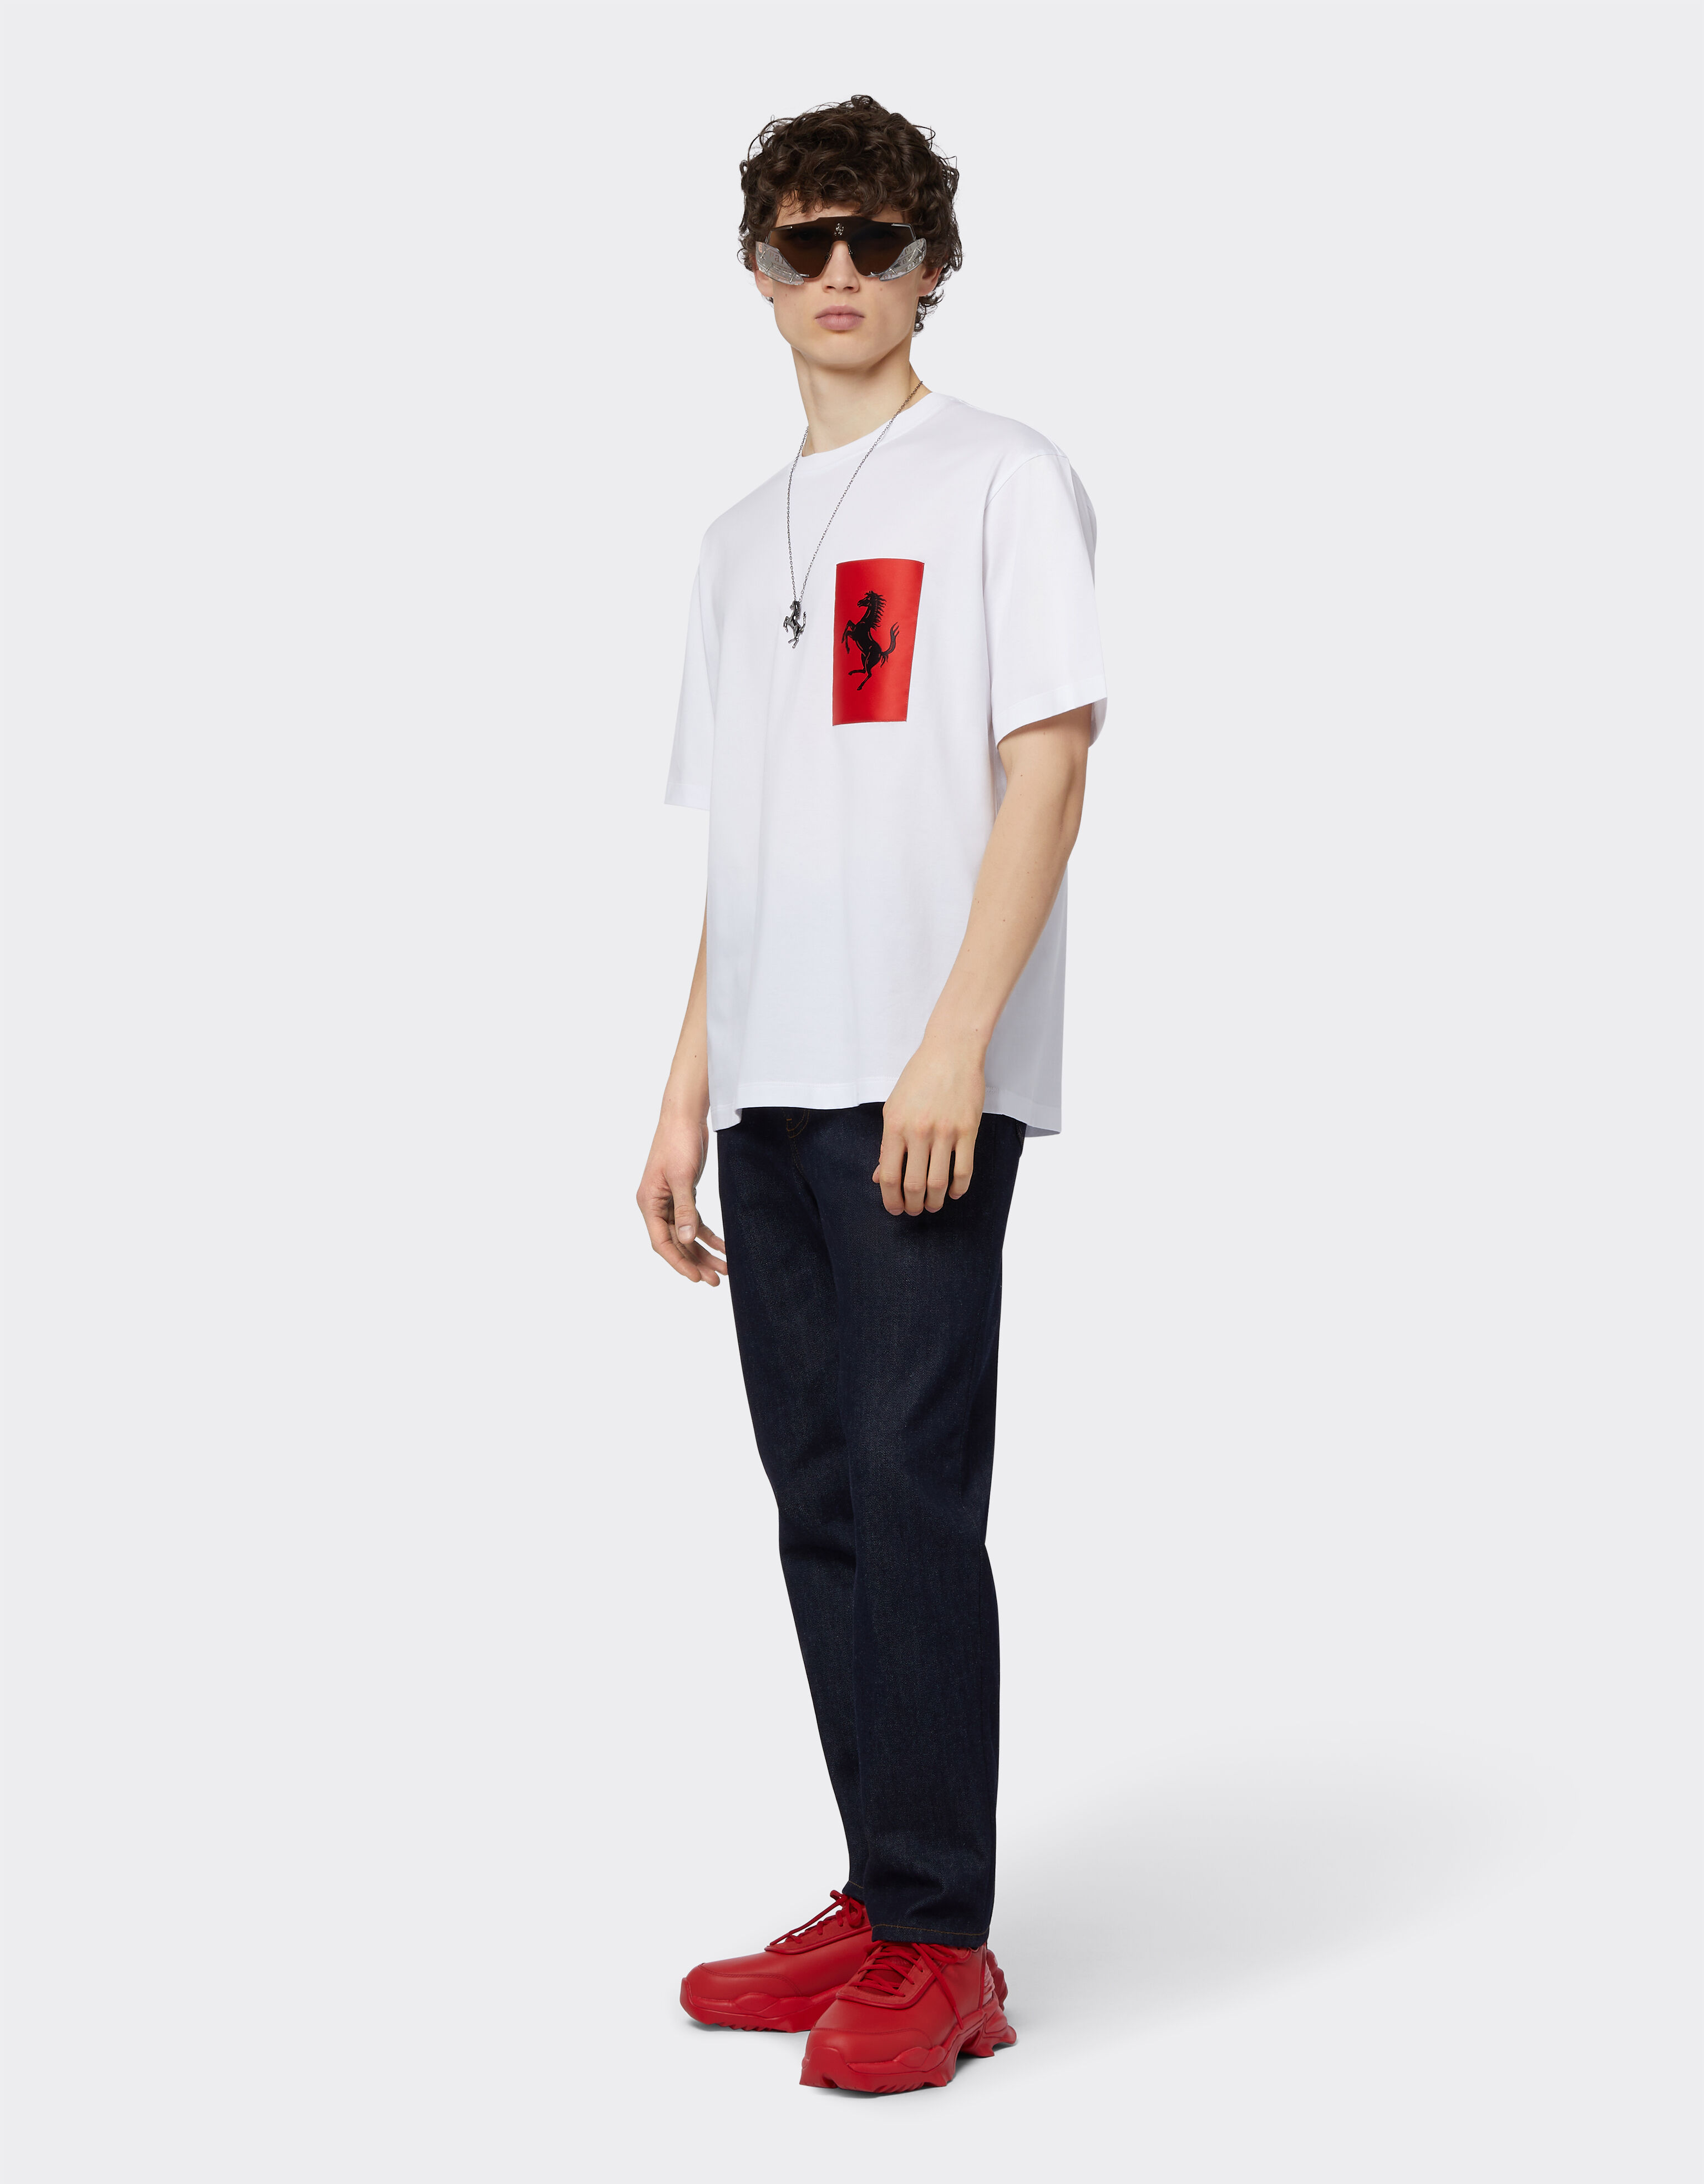 Ferrari Cotton T-shirt with Prancing Horse pocket Optical White 47824f